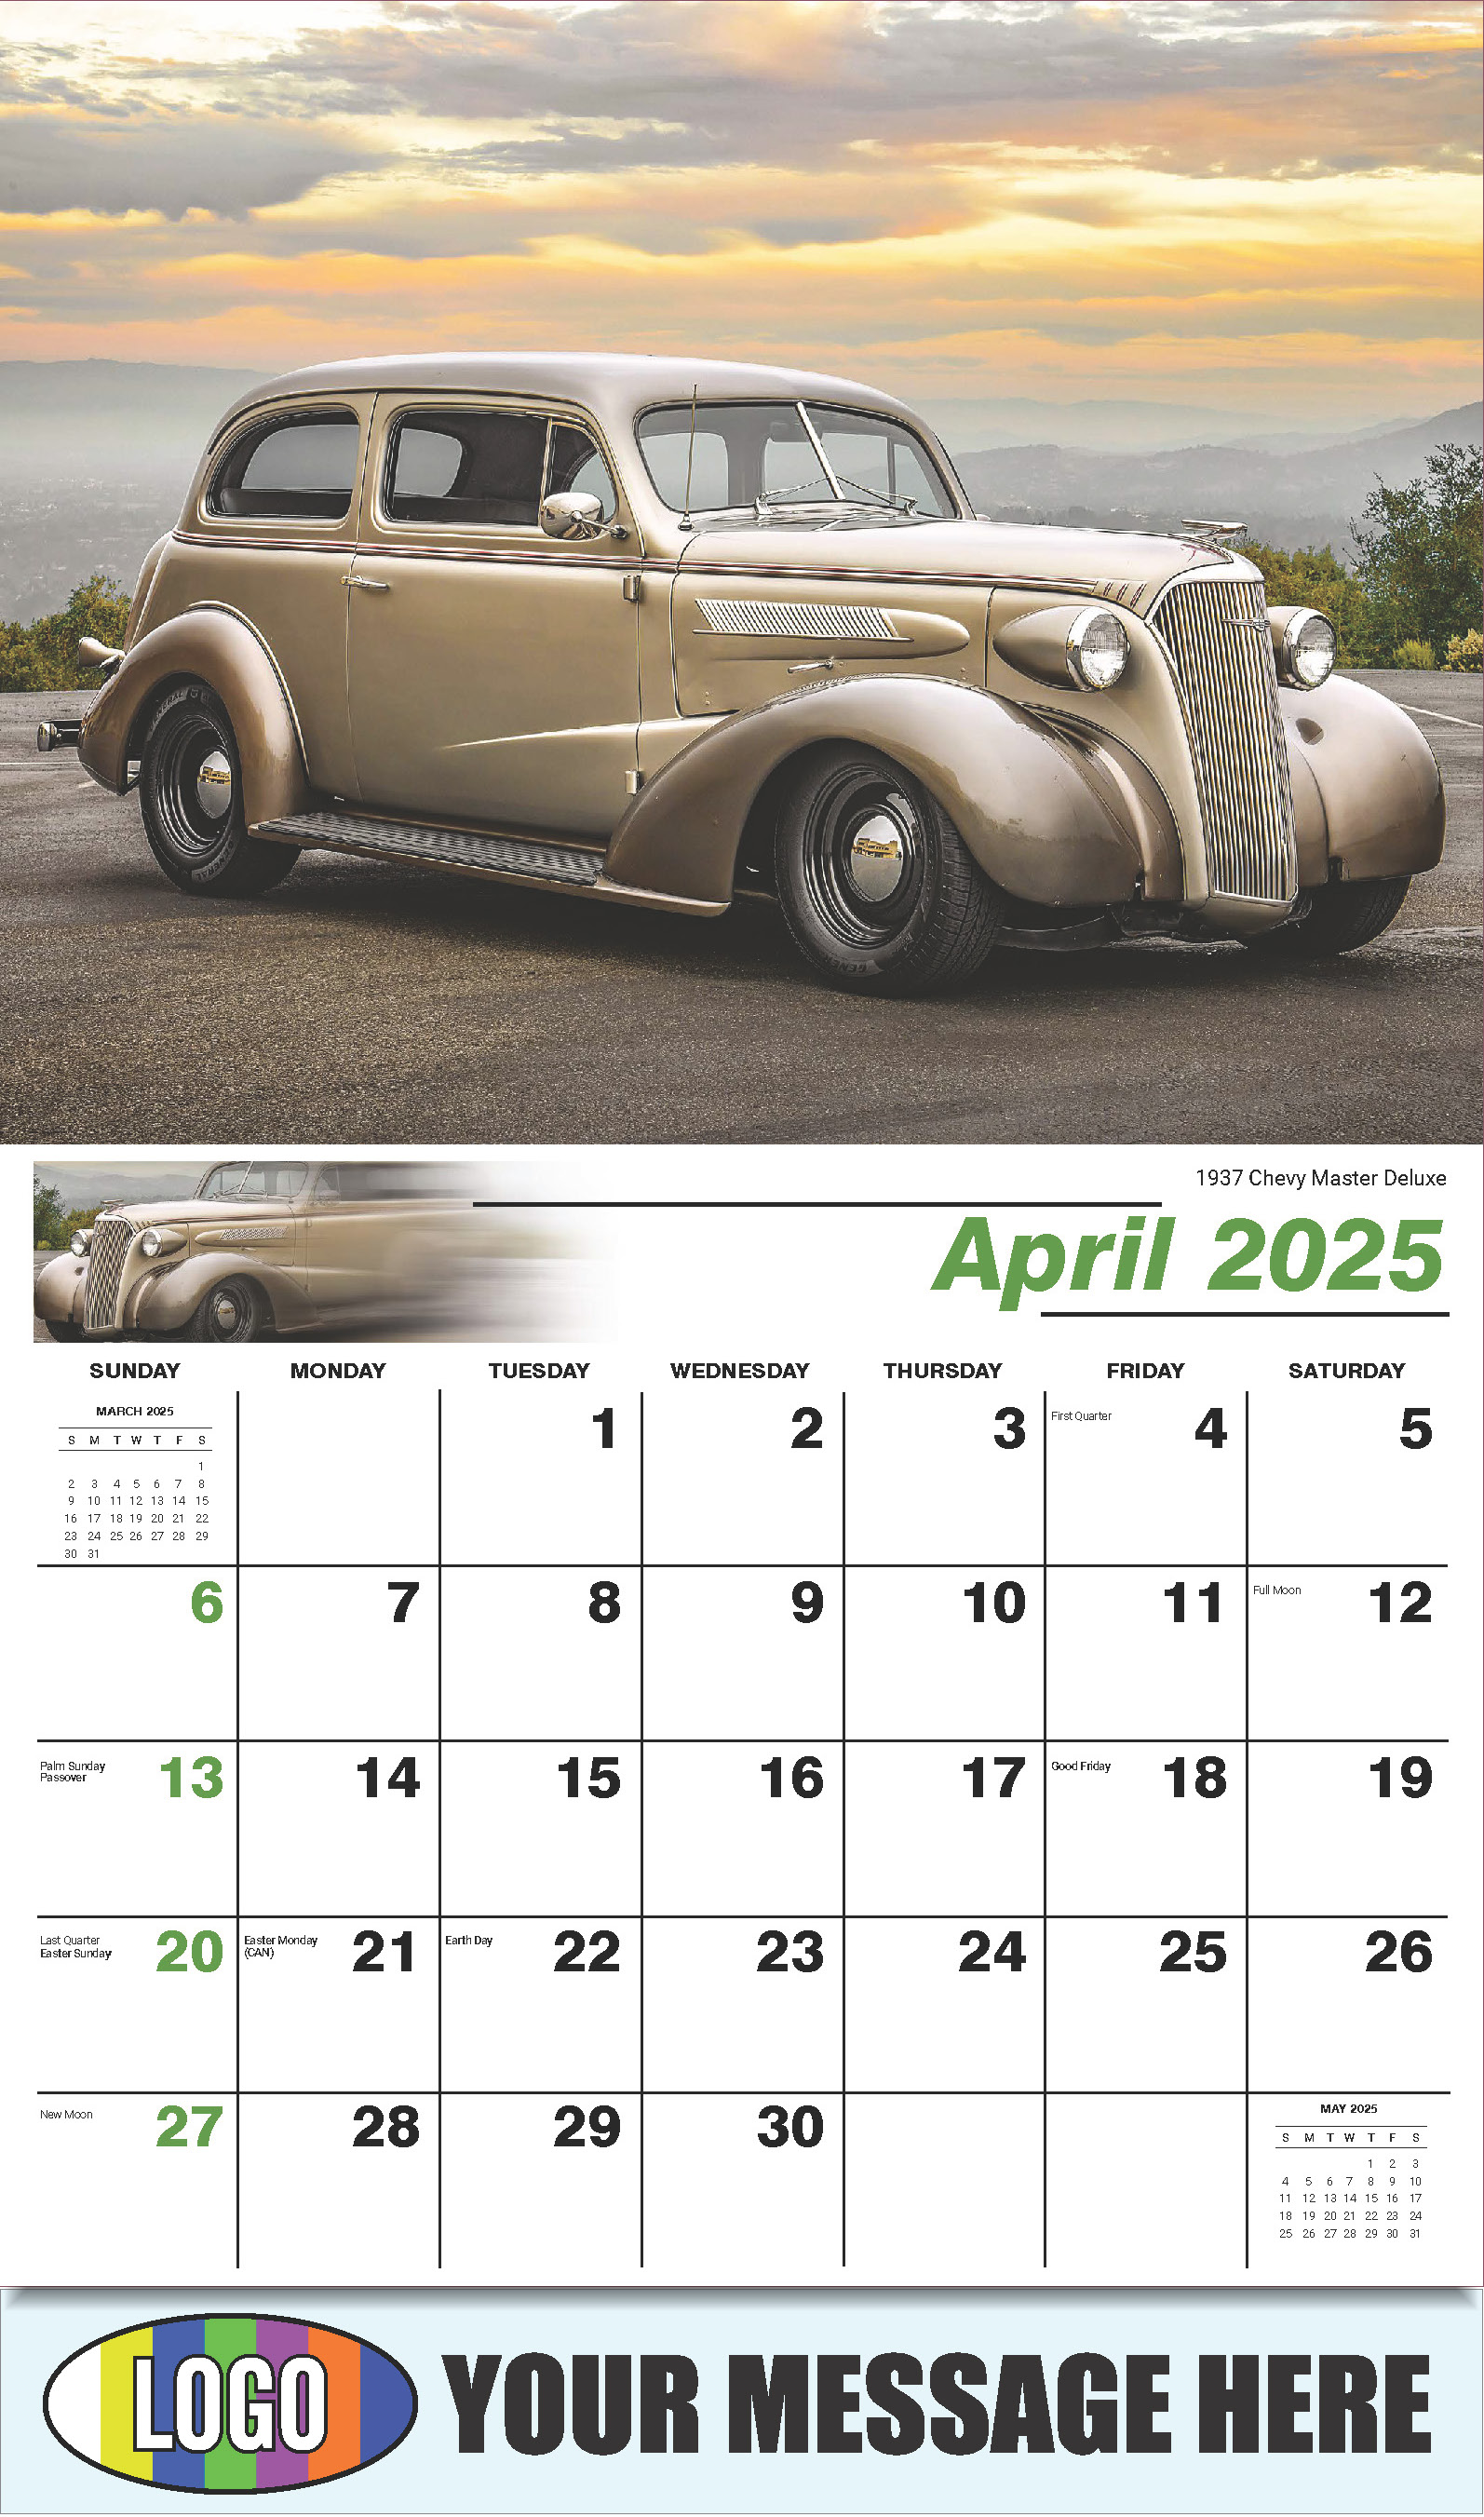 GM Classics 2025 Automotive Business Advertising Calendar - April